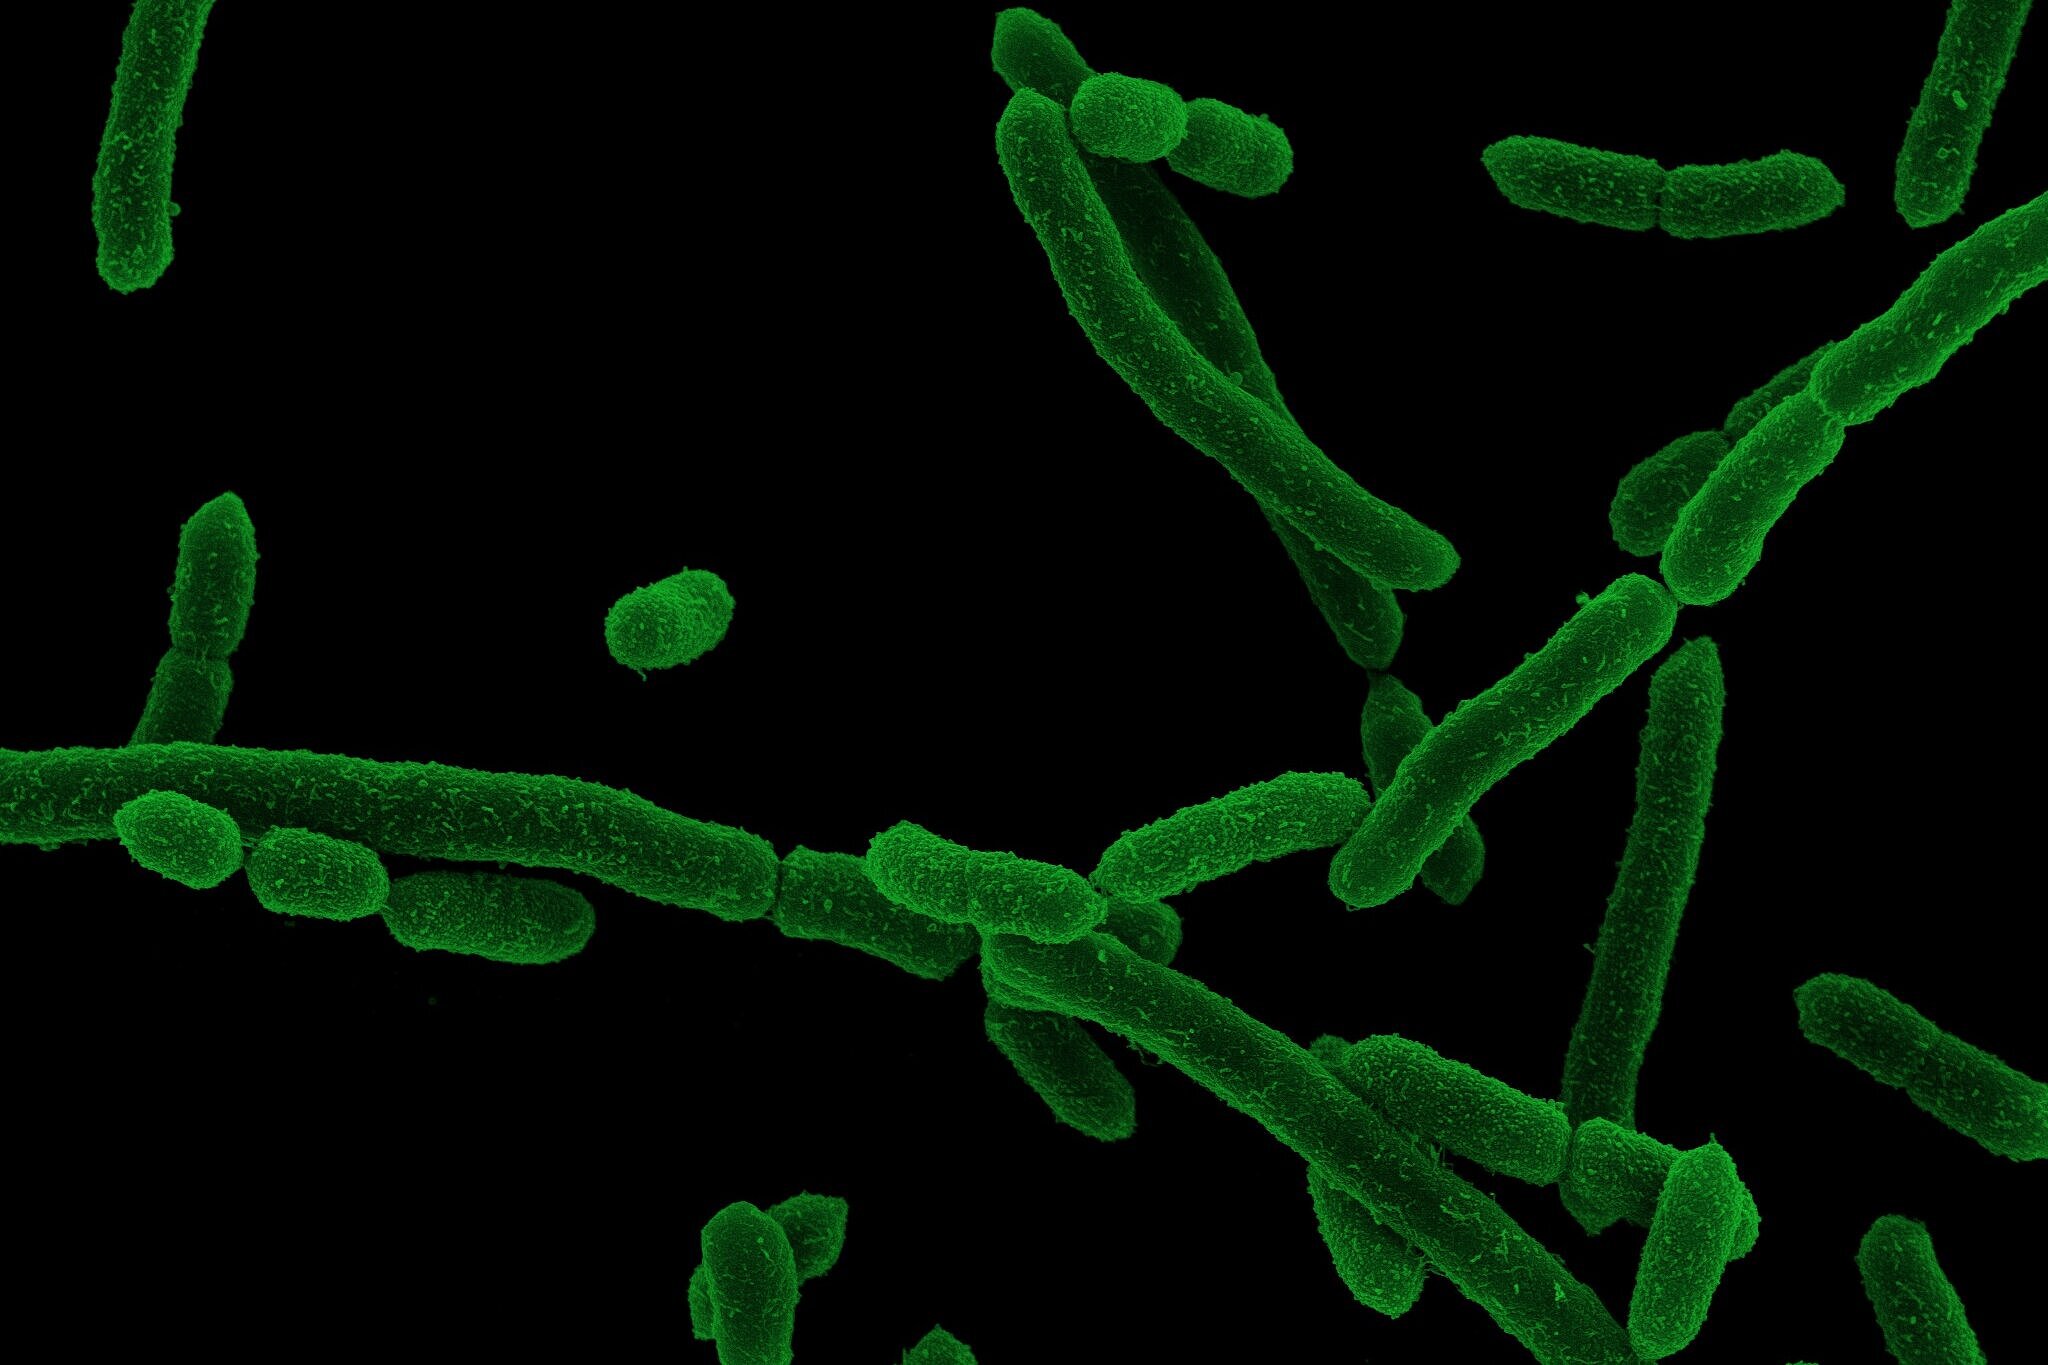 Green rod-shaped bacteria